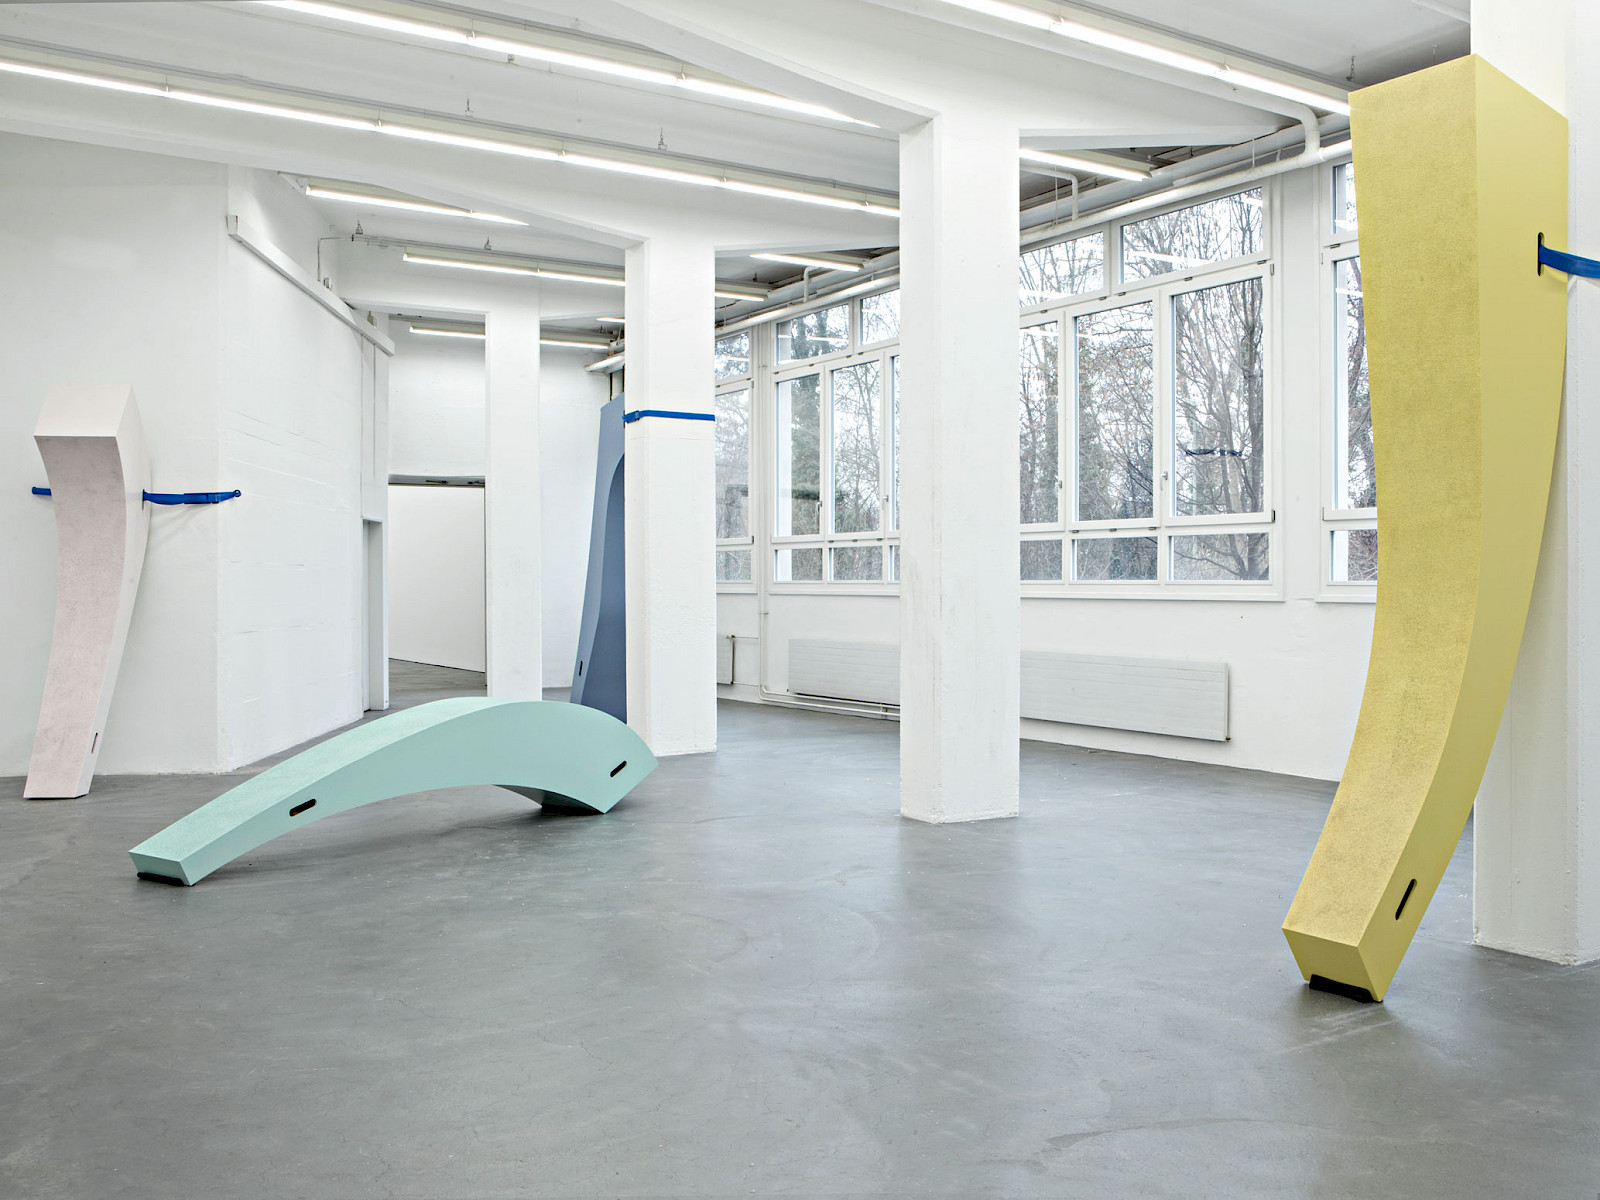 Karin Hueber, Installation view "Traceur / Traceuse", Kunsthaus Baselland, Muttenz / Basel, 2014